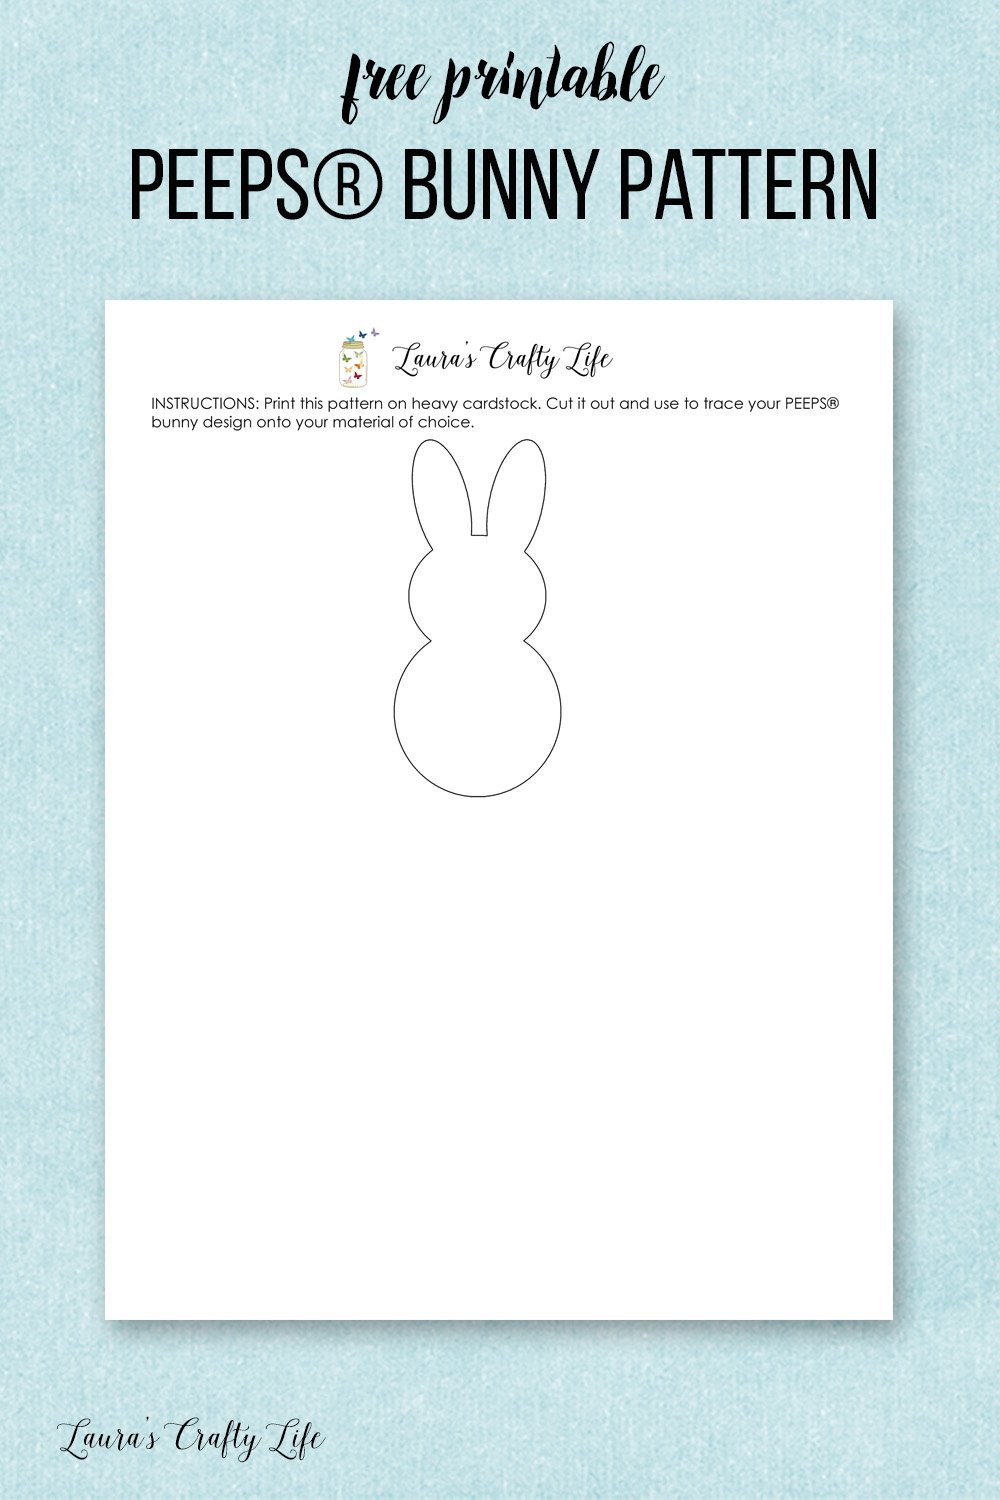 Free Printable PEEPS® Bunny Pattern